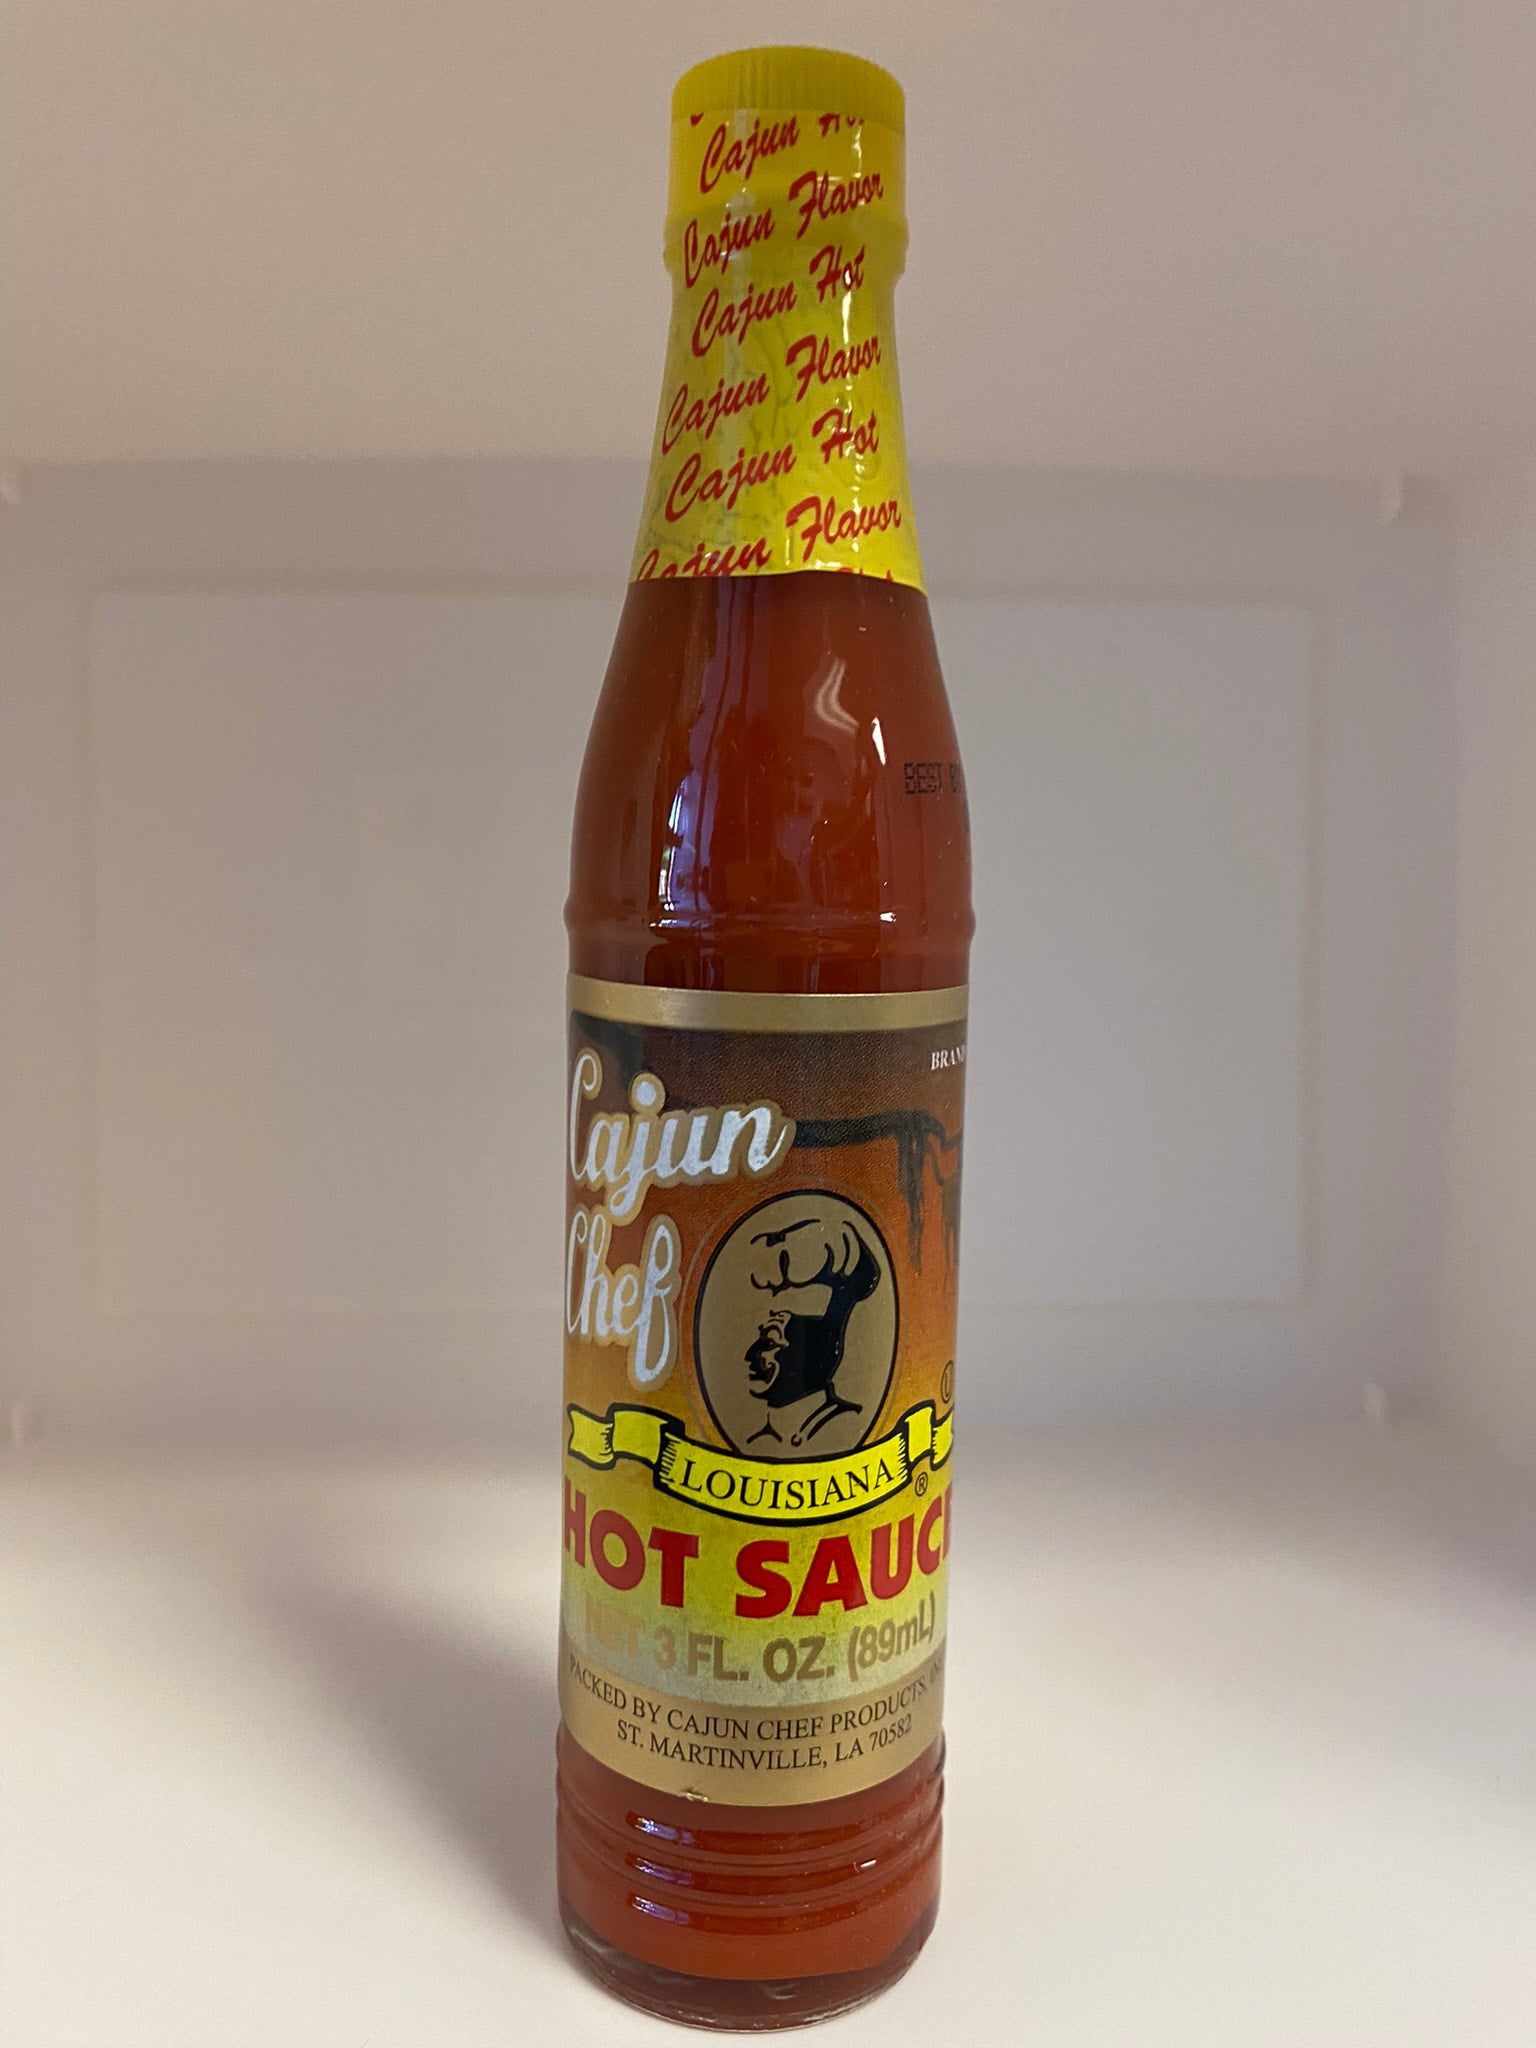 Cajun Chef Louisiana Hot Sauce 3 oz